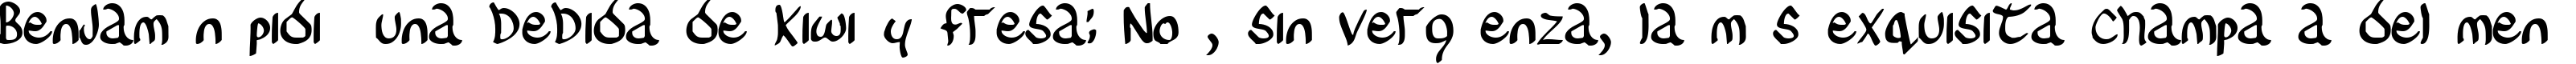 Пример написания шрифтом Sinead текста на испанском